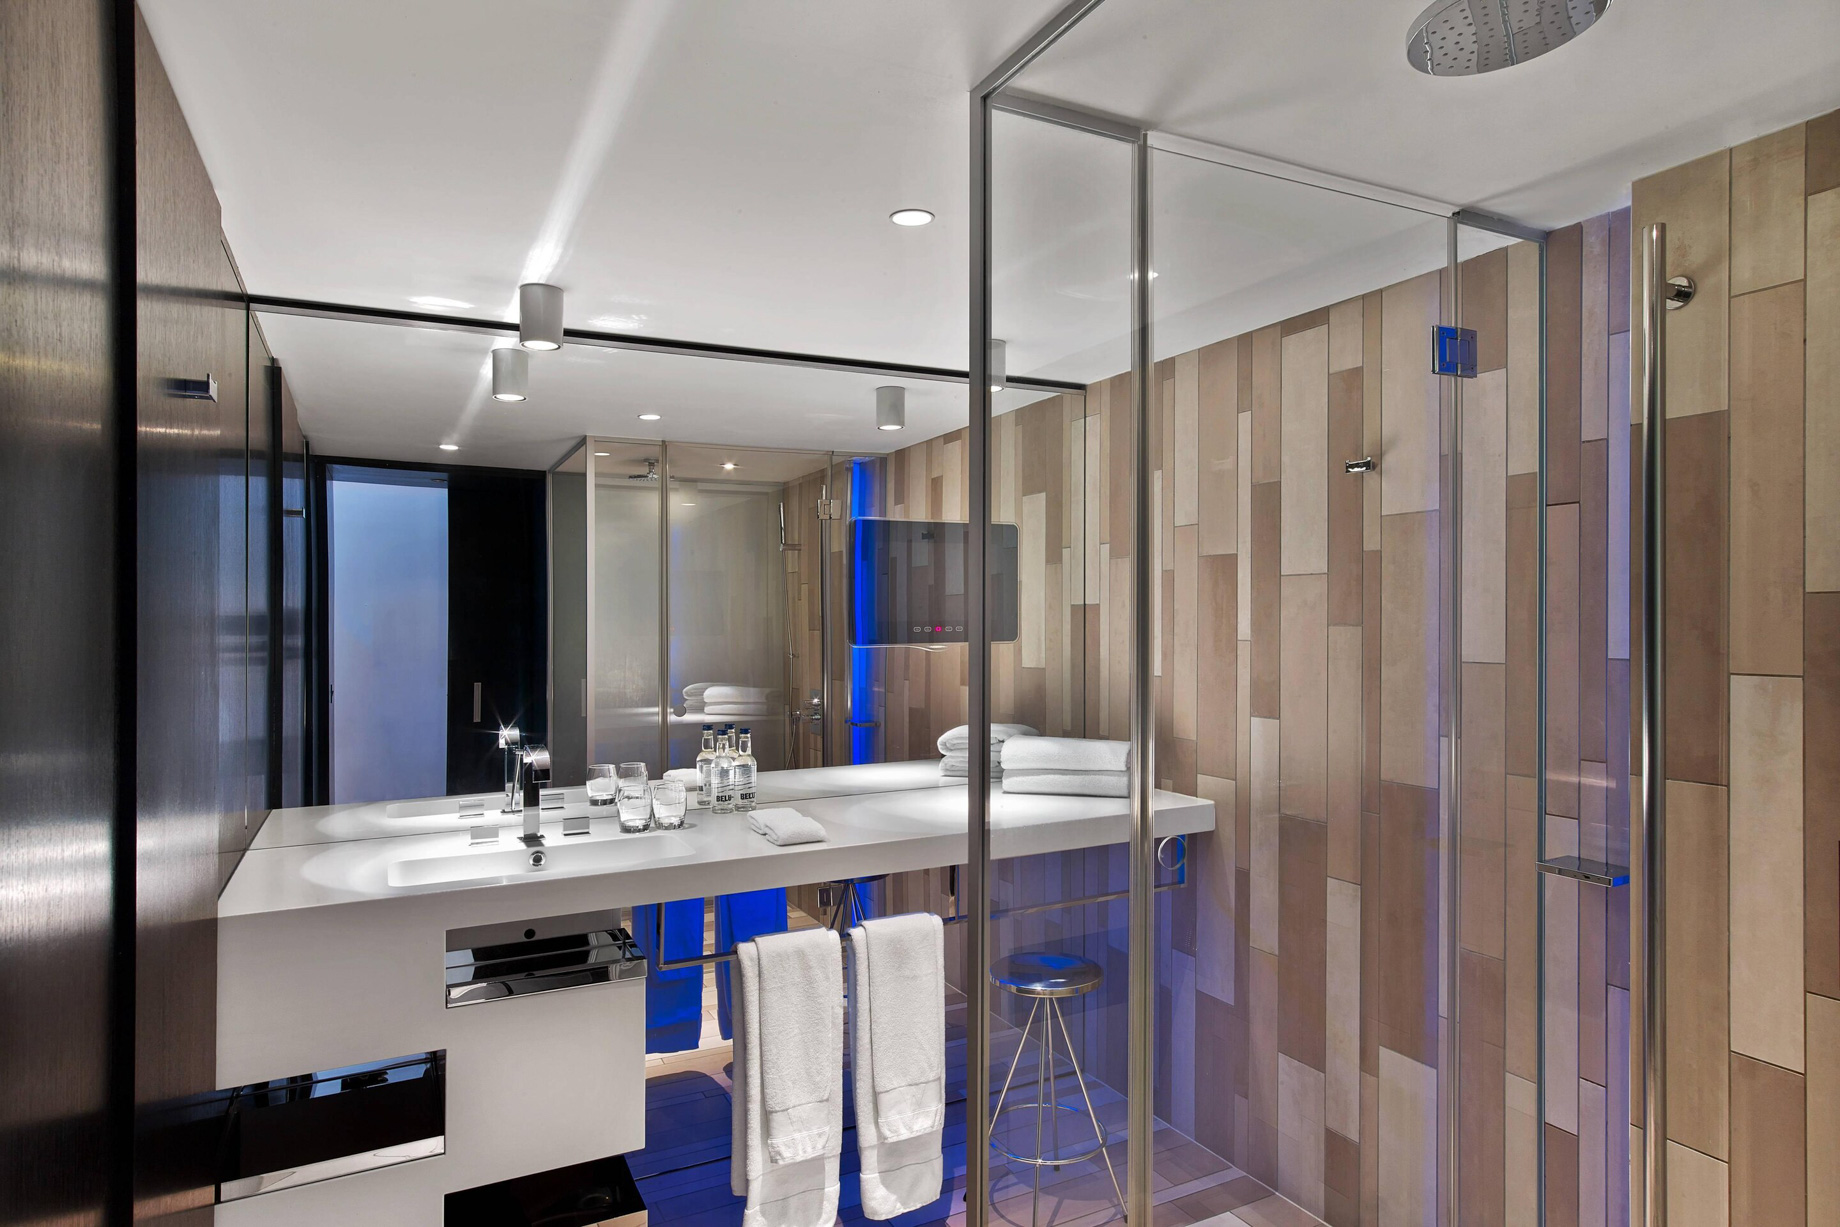 W London Hotel - London, United Kingdom - Suite Bathroom Shower